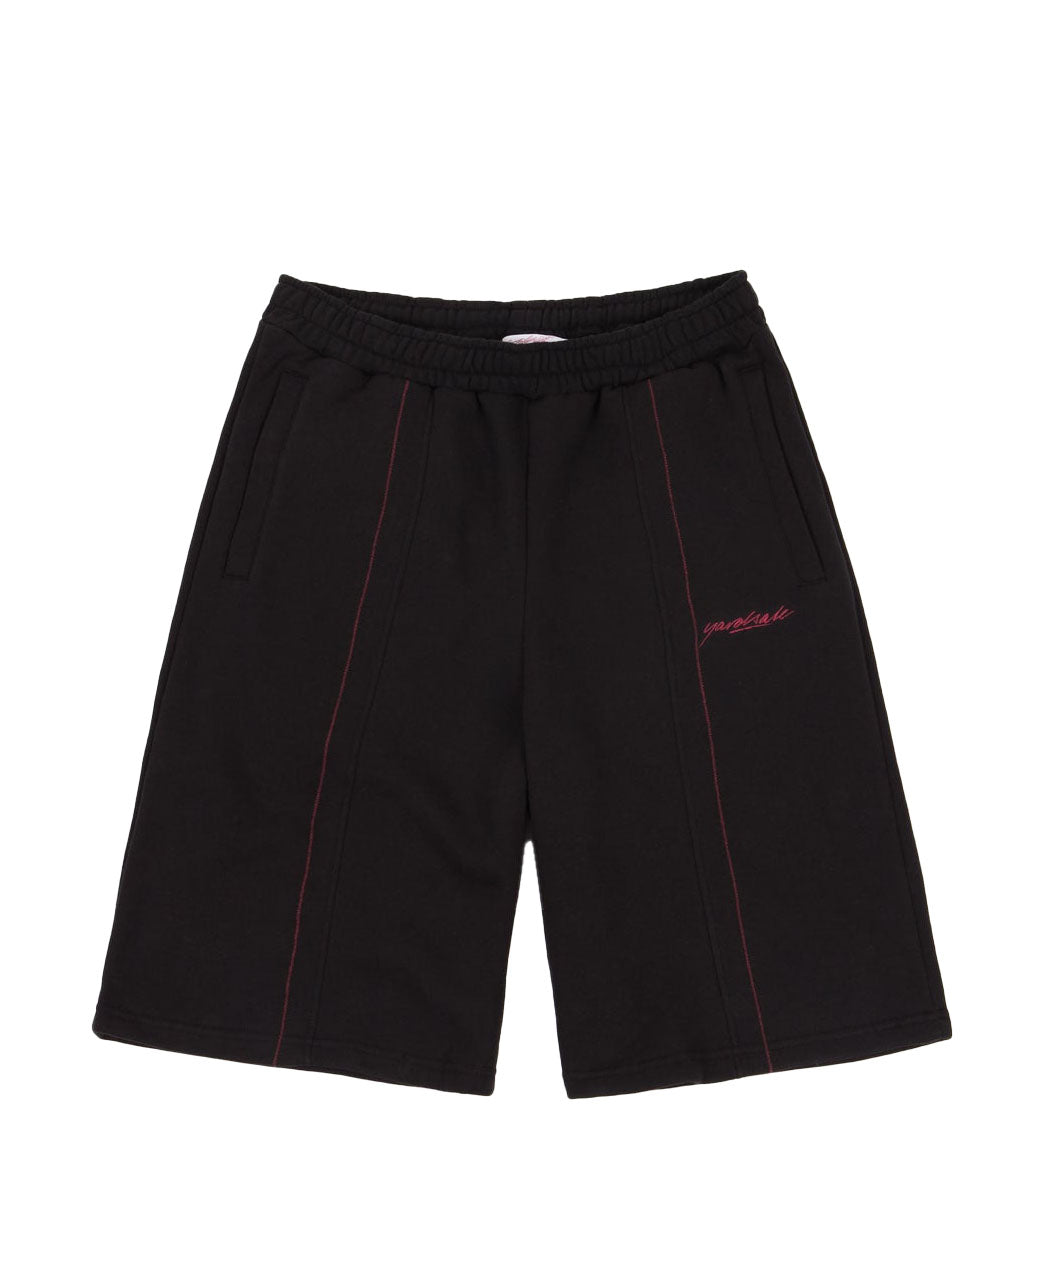 Yardsale Tijuana Sweat Shorts Negro/Rojo